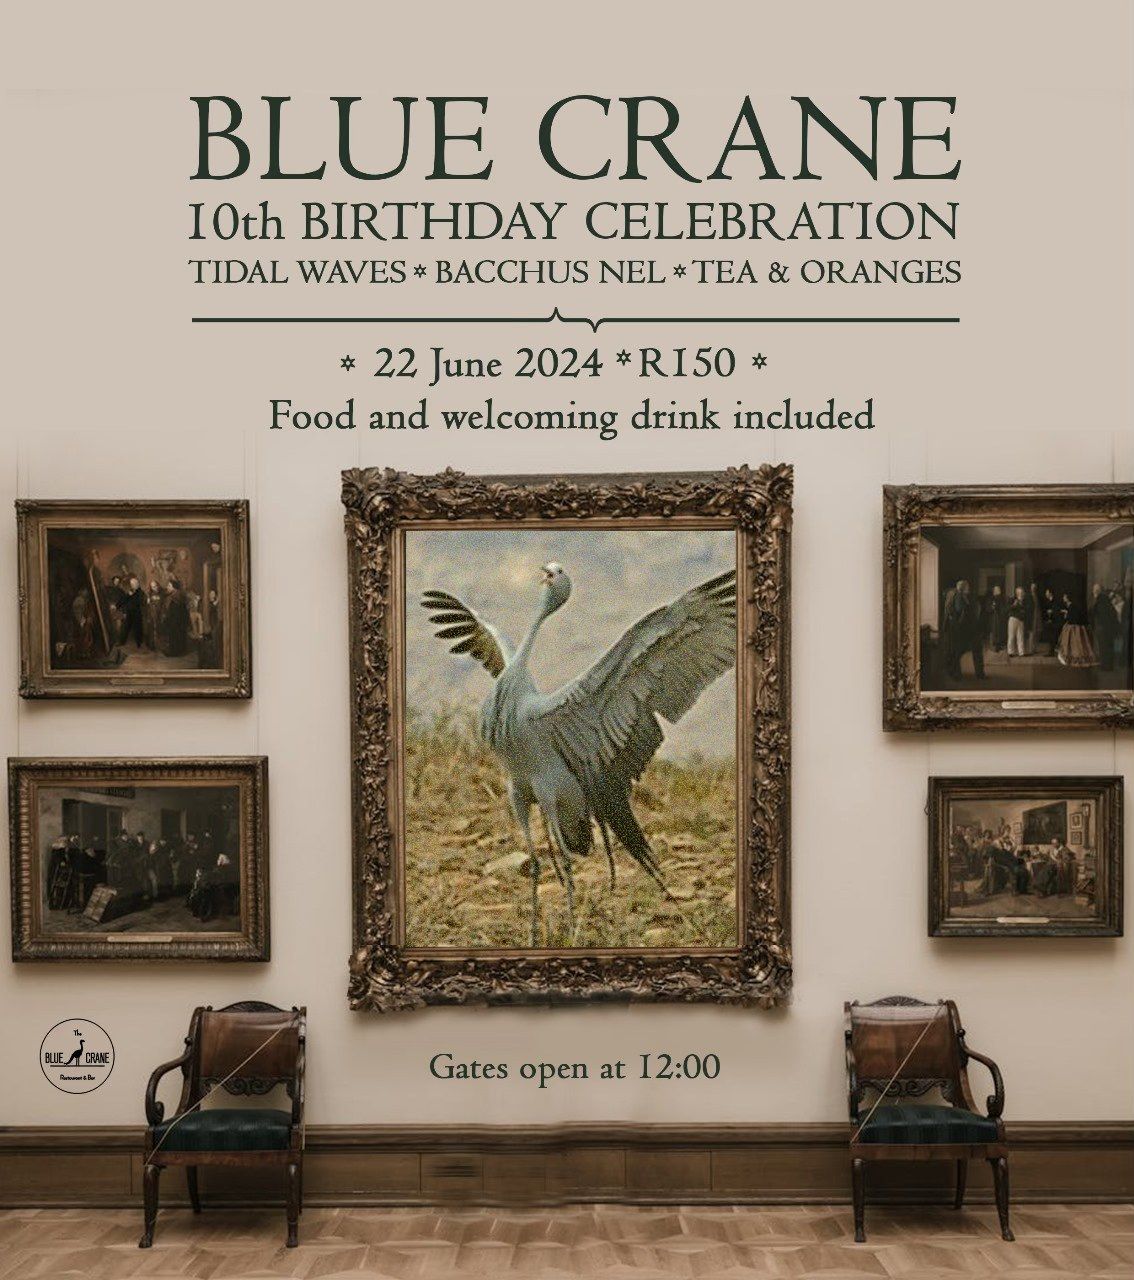 The Blue Crane Restaurant Celebrates a Milestone